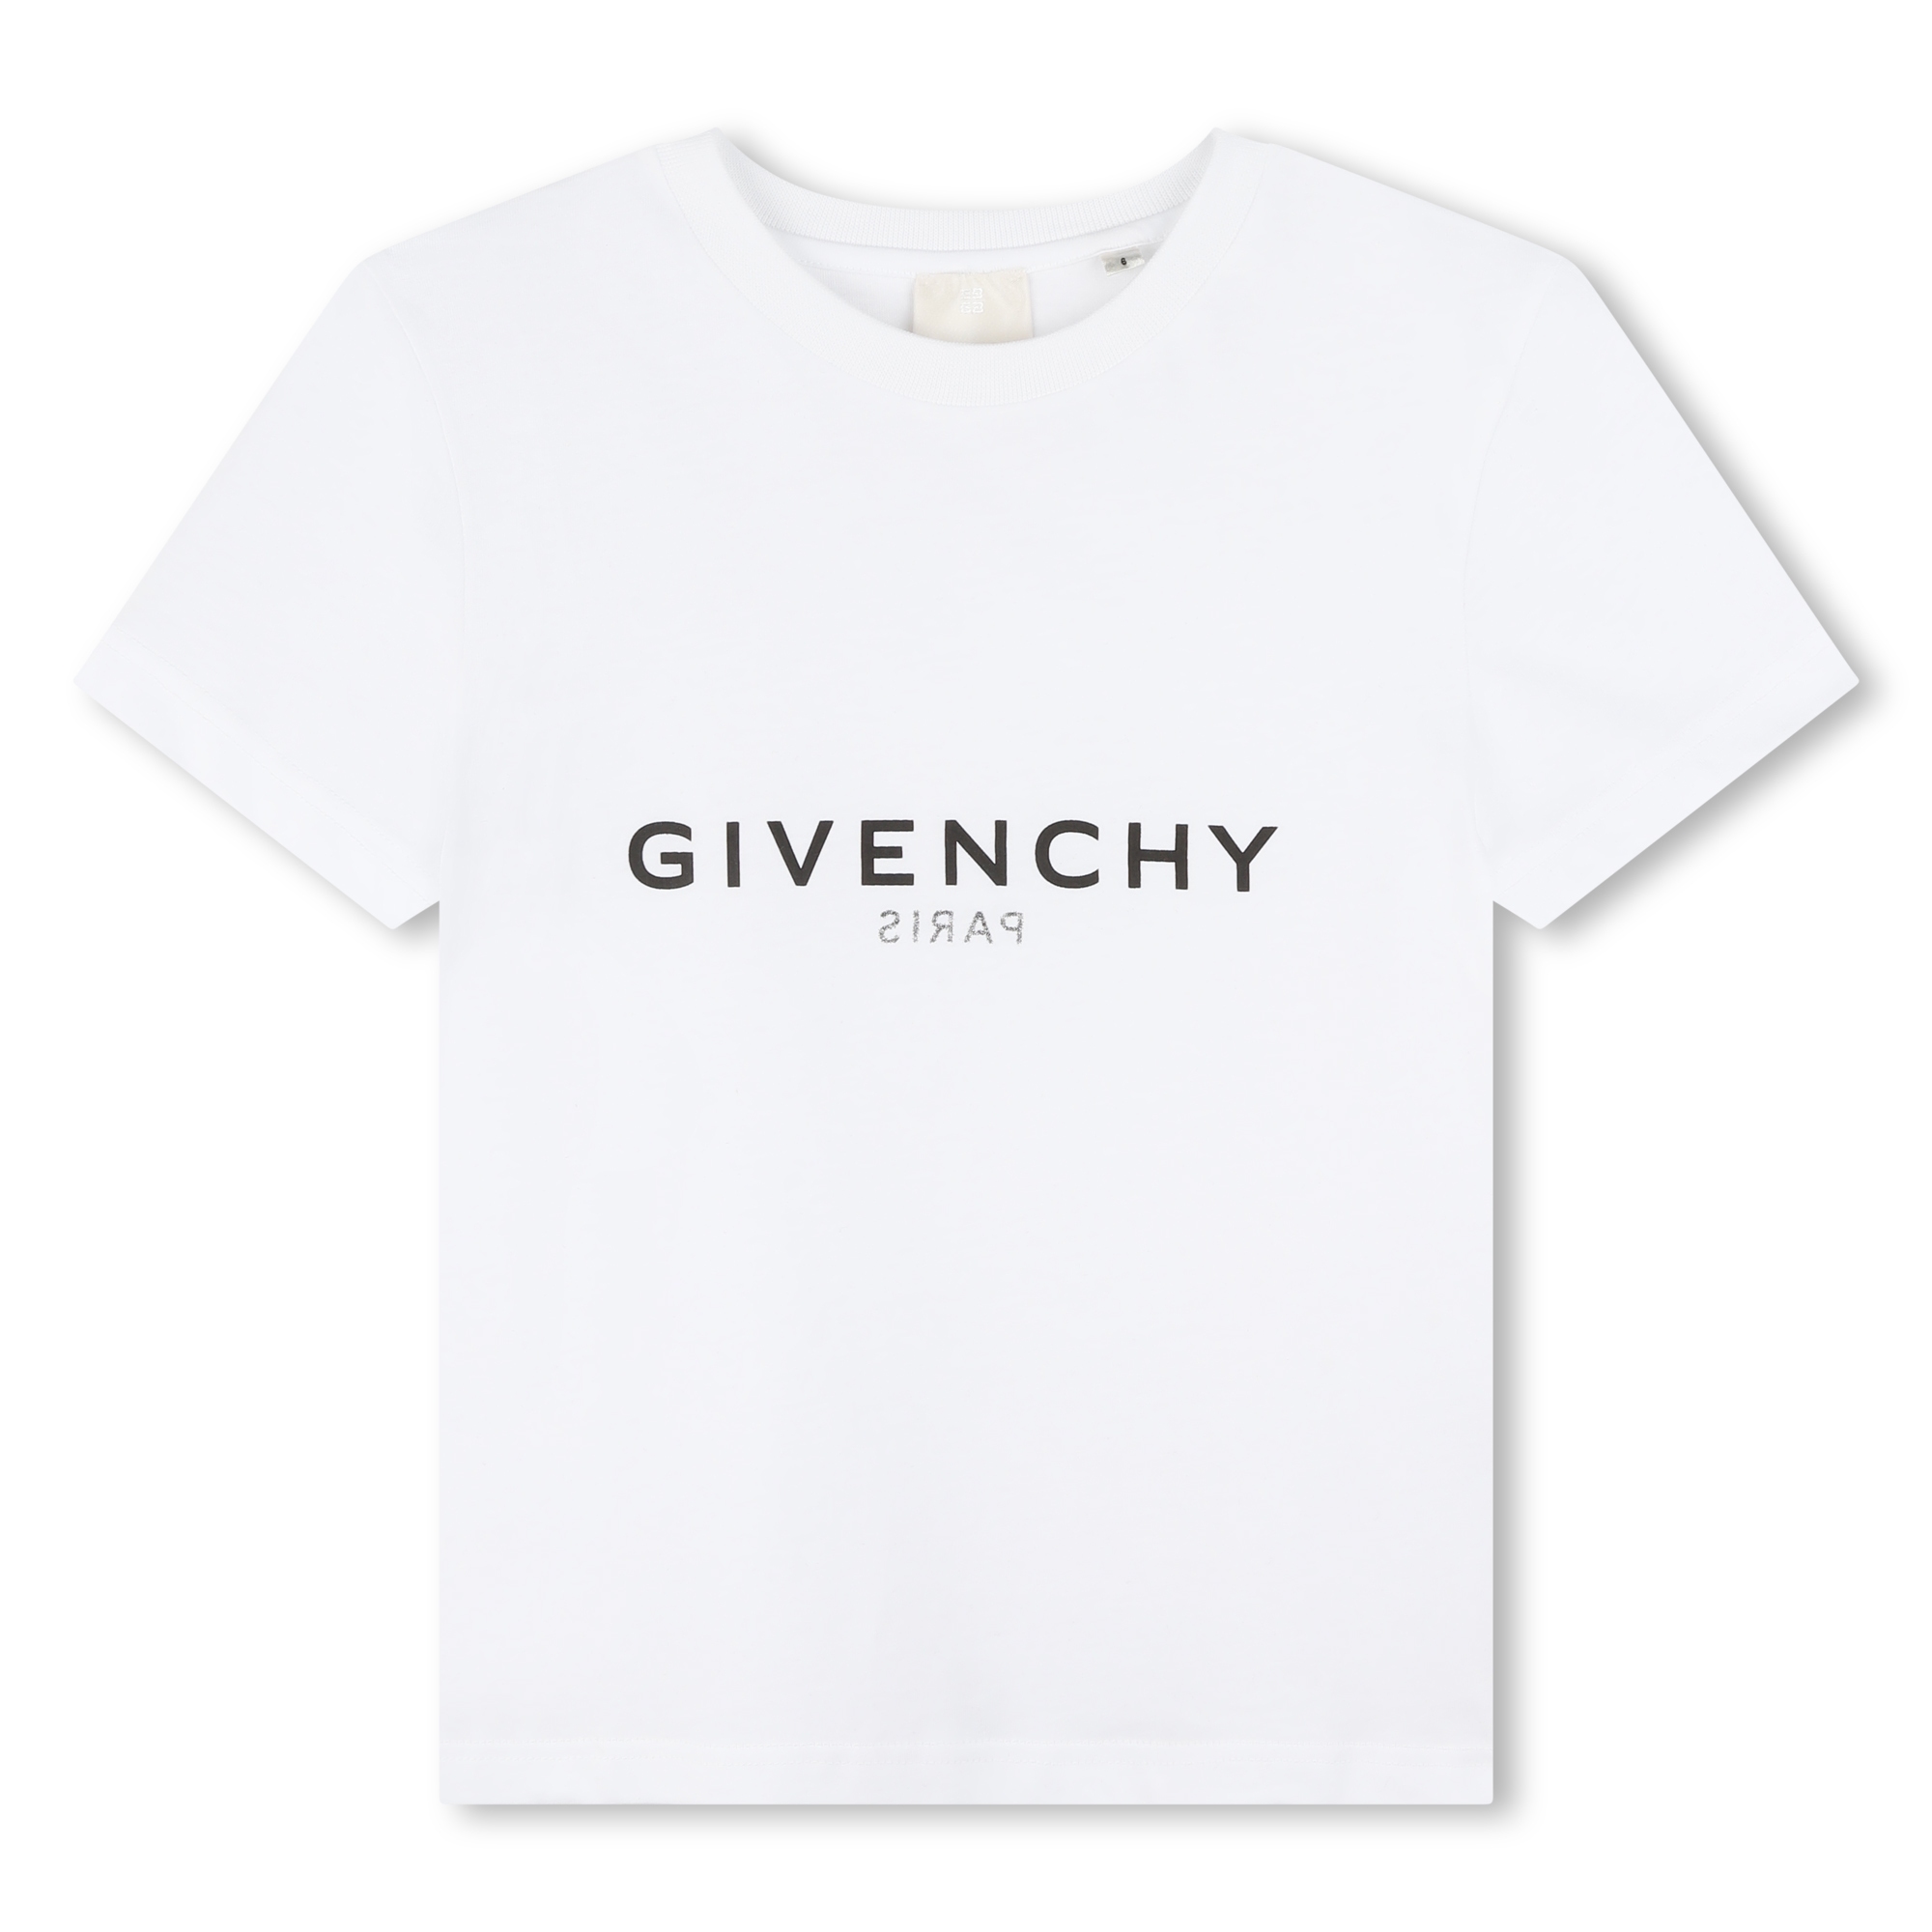 T-shirt coton manches courtes GIVENCHY pour GARCON